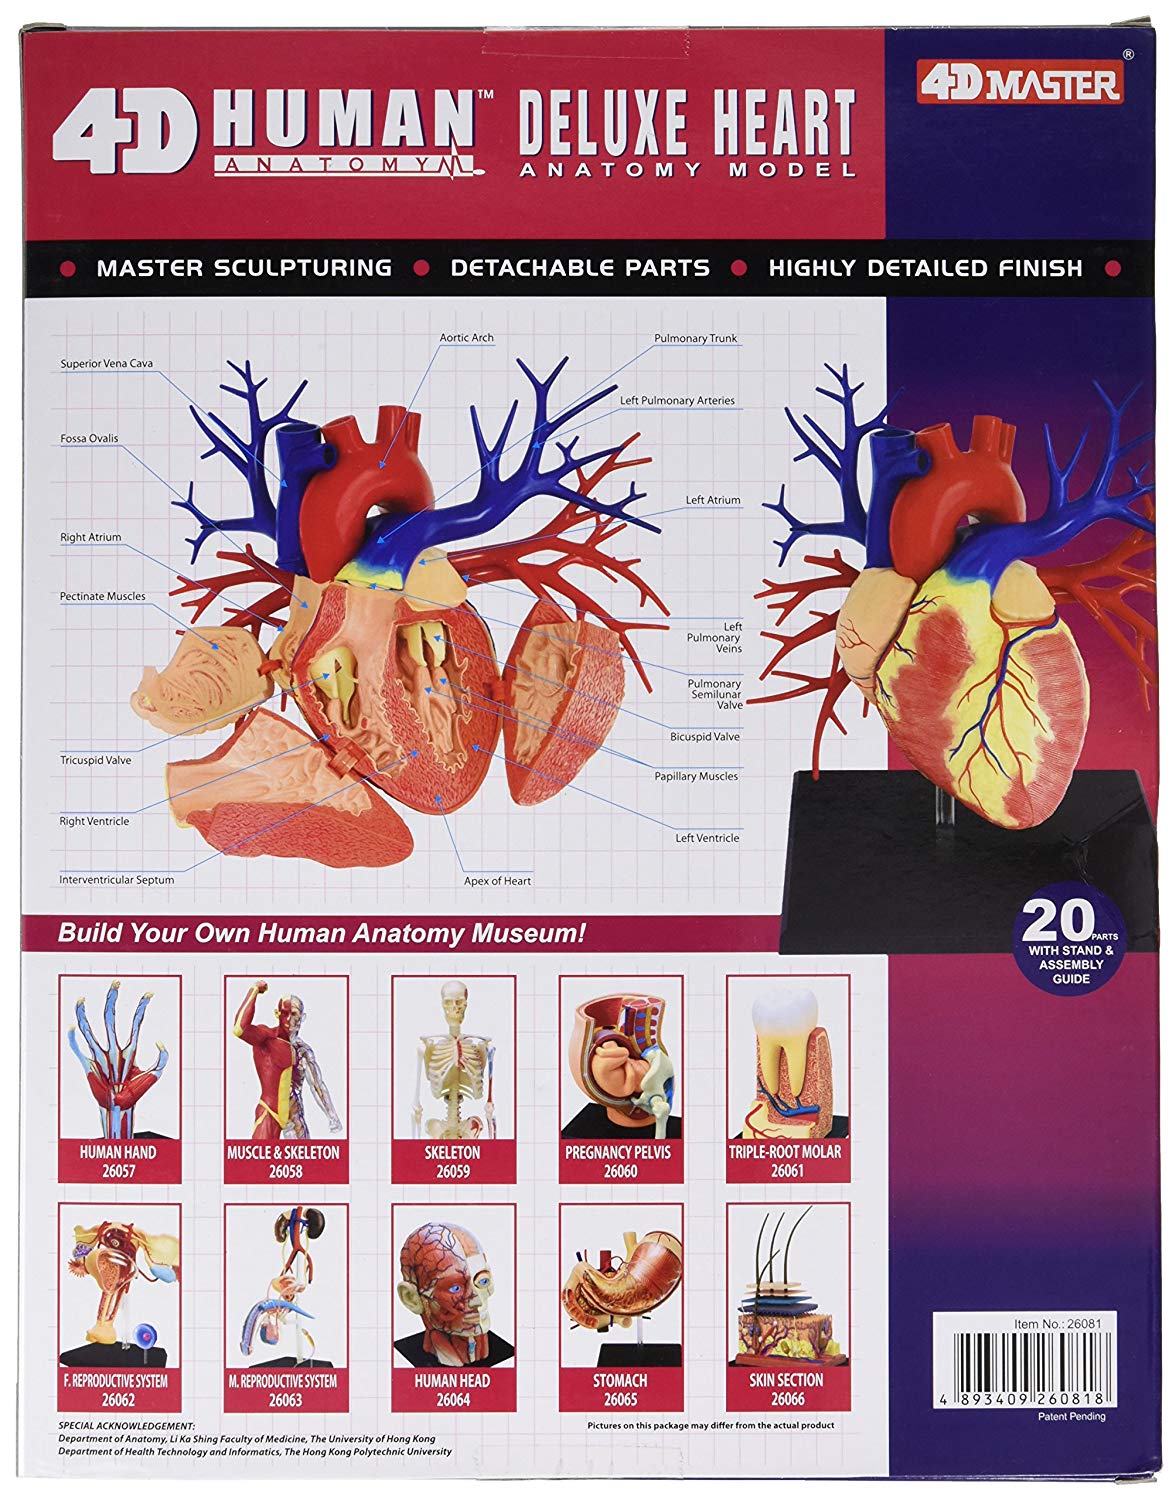 HEART ANATOMY MODEL